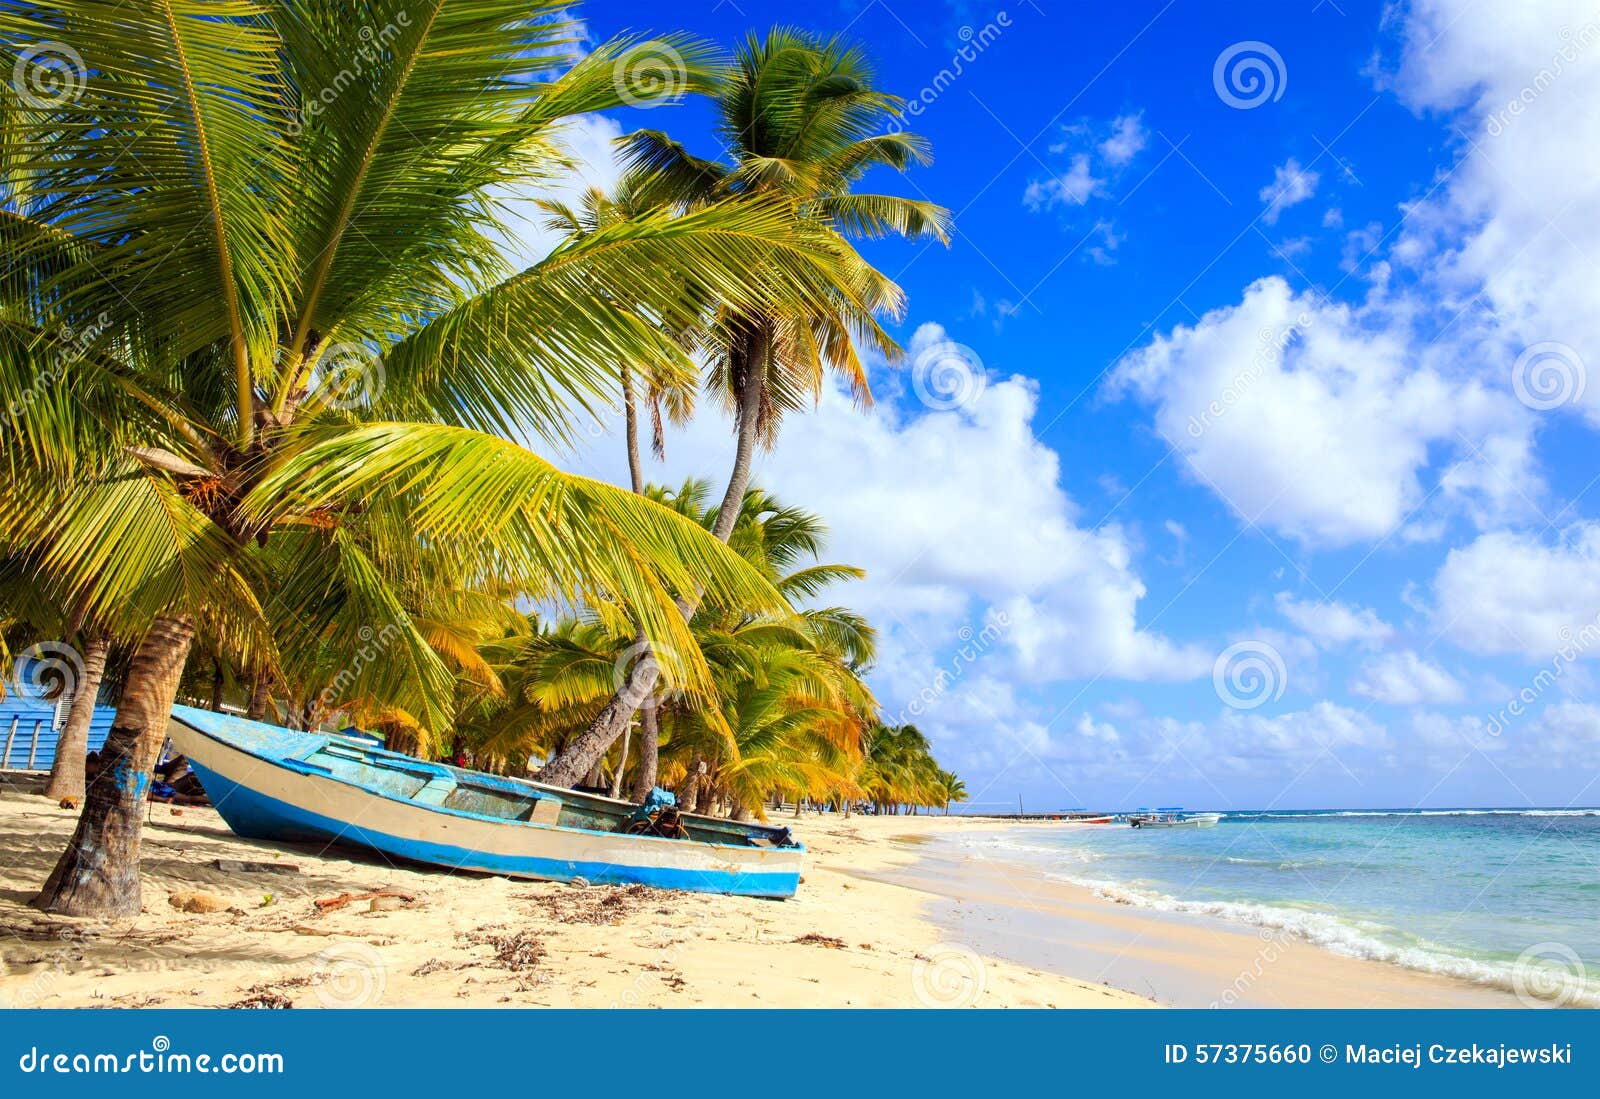 caribbean beach in dominican republic